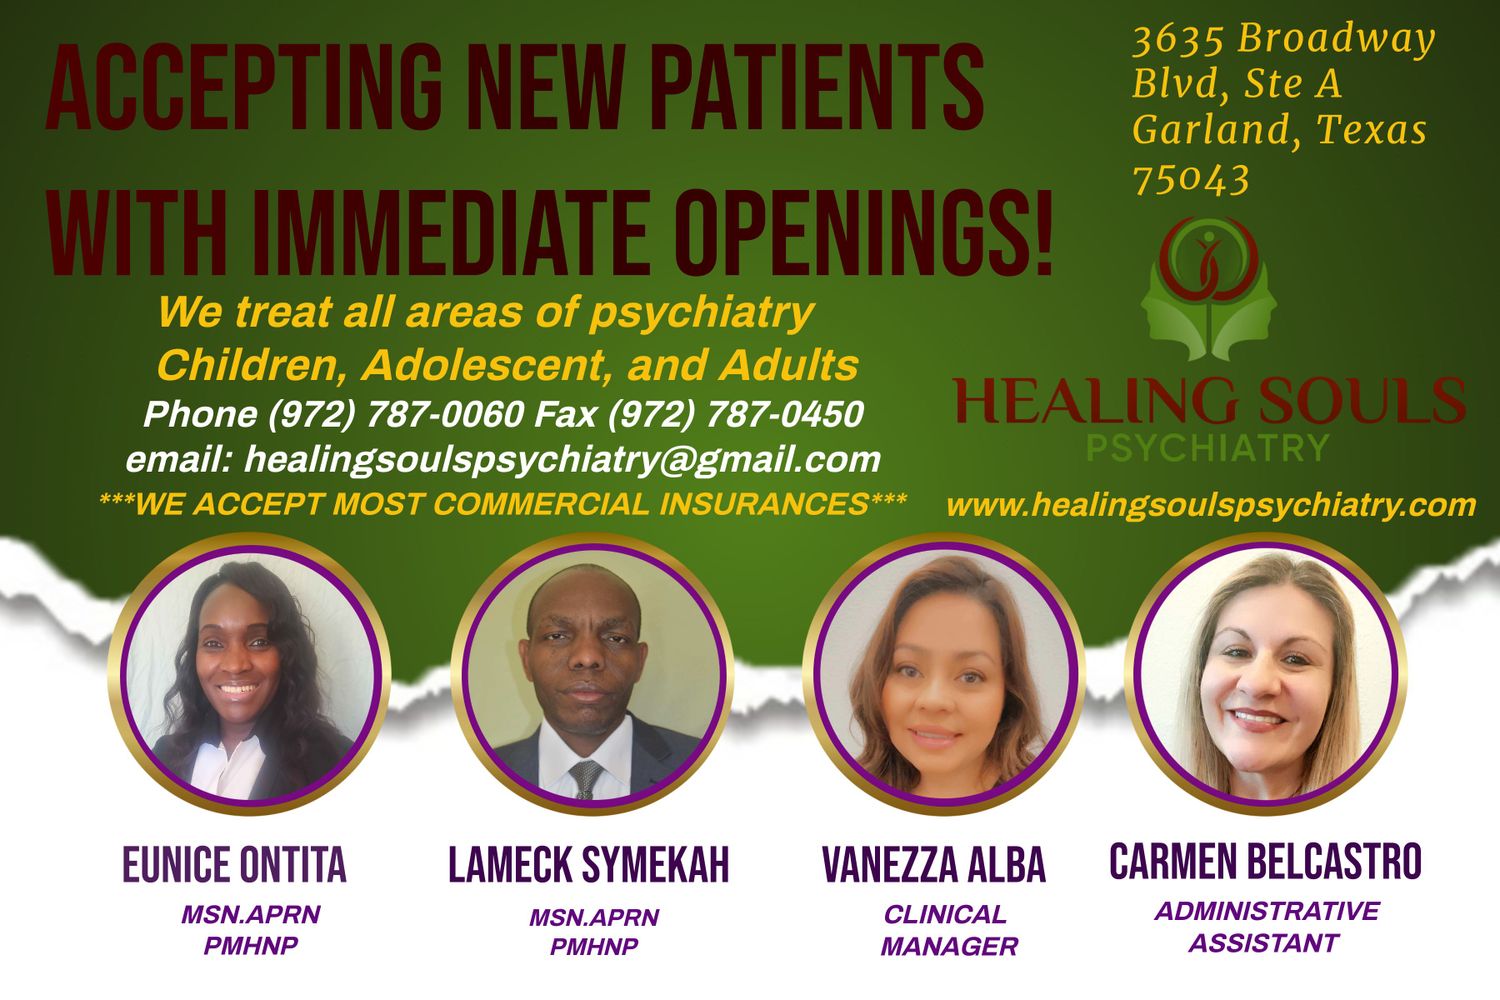 Gallery Photo of Healing Souls Psychiatry Staff